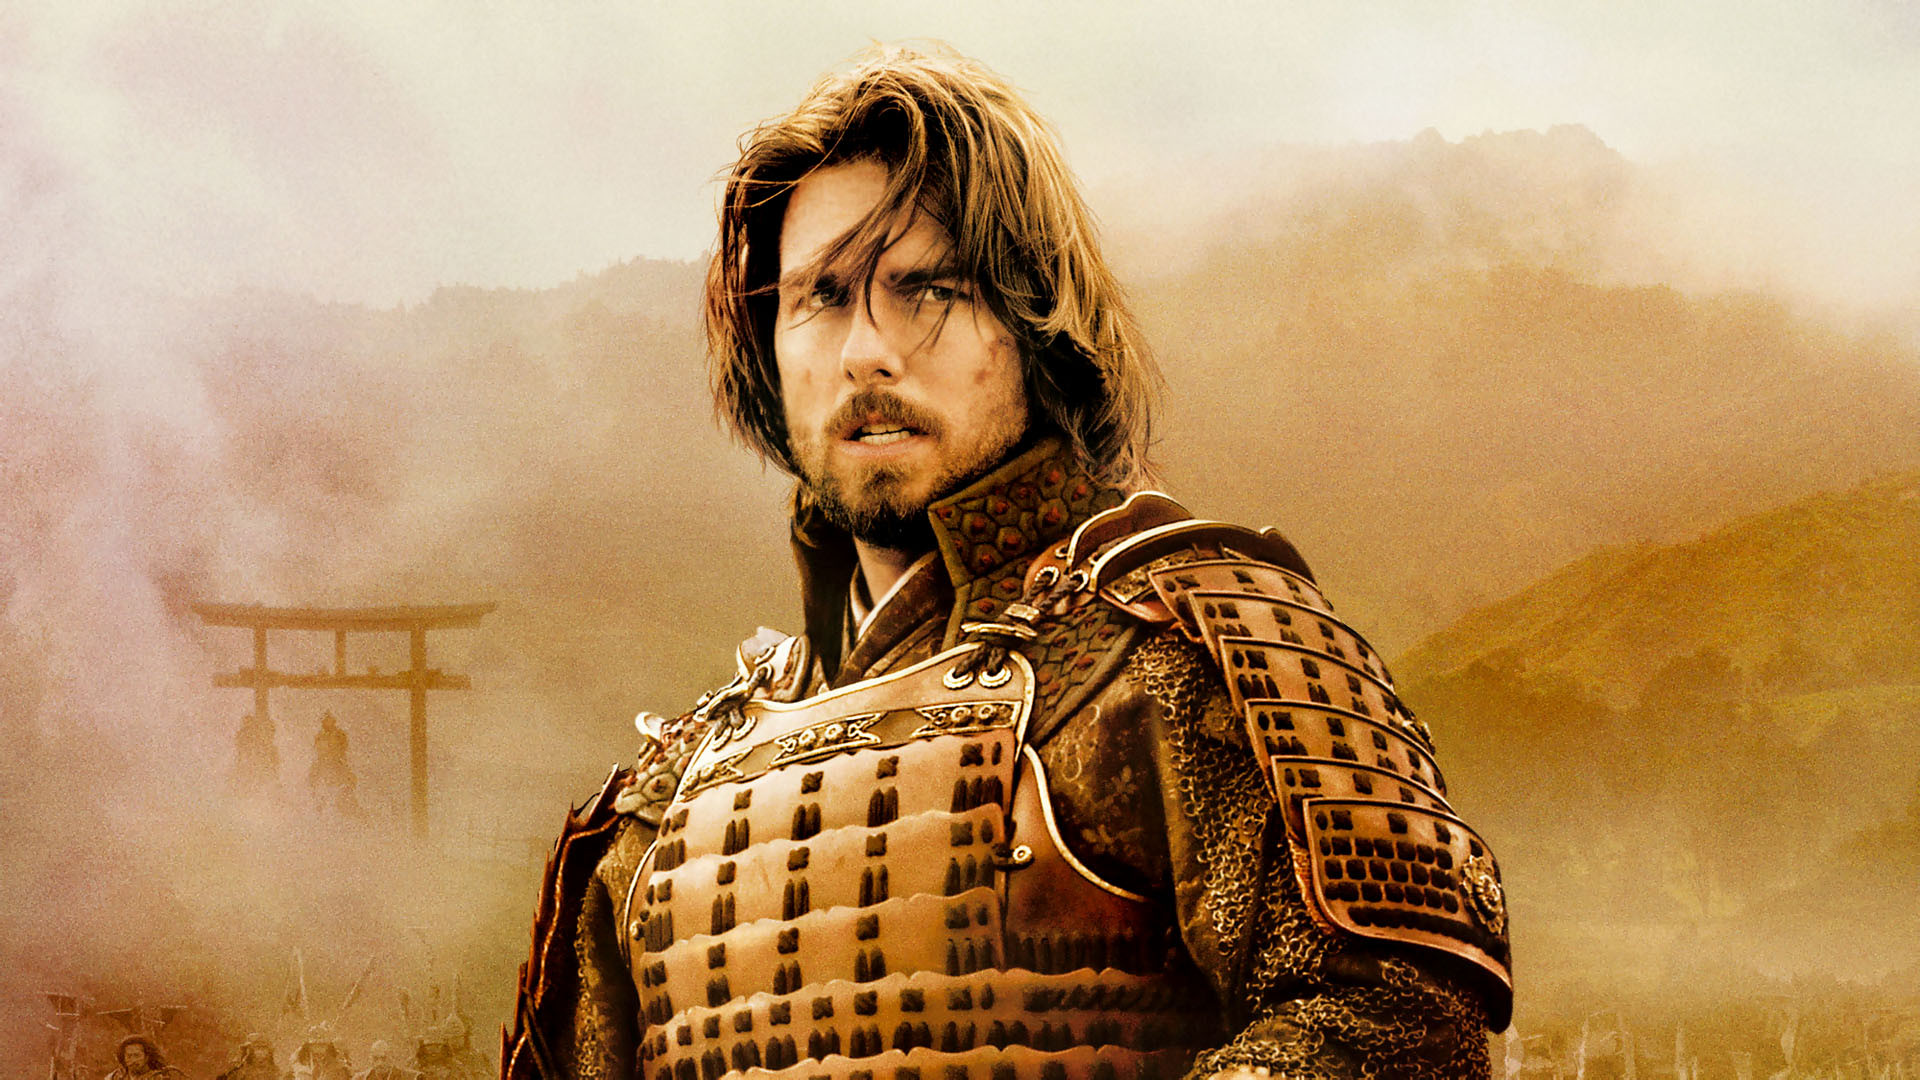 Tom Cruise was the Last Samurai 11 years ago.